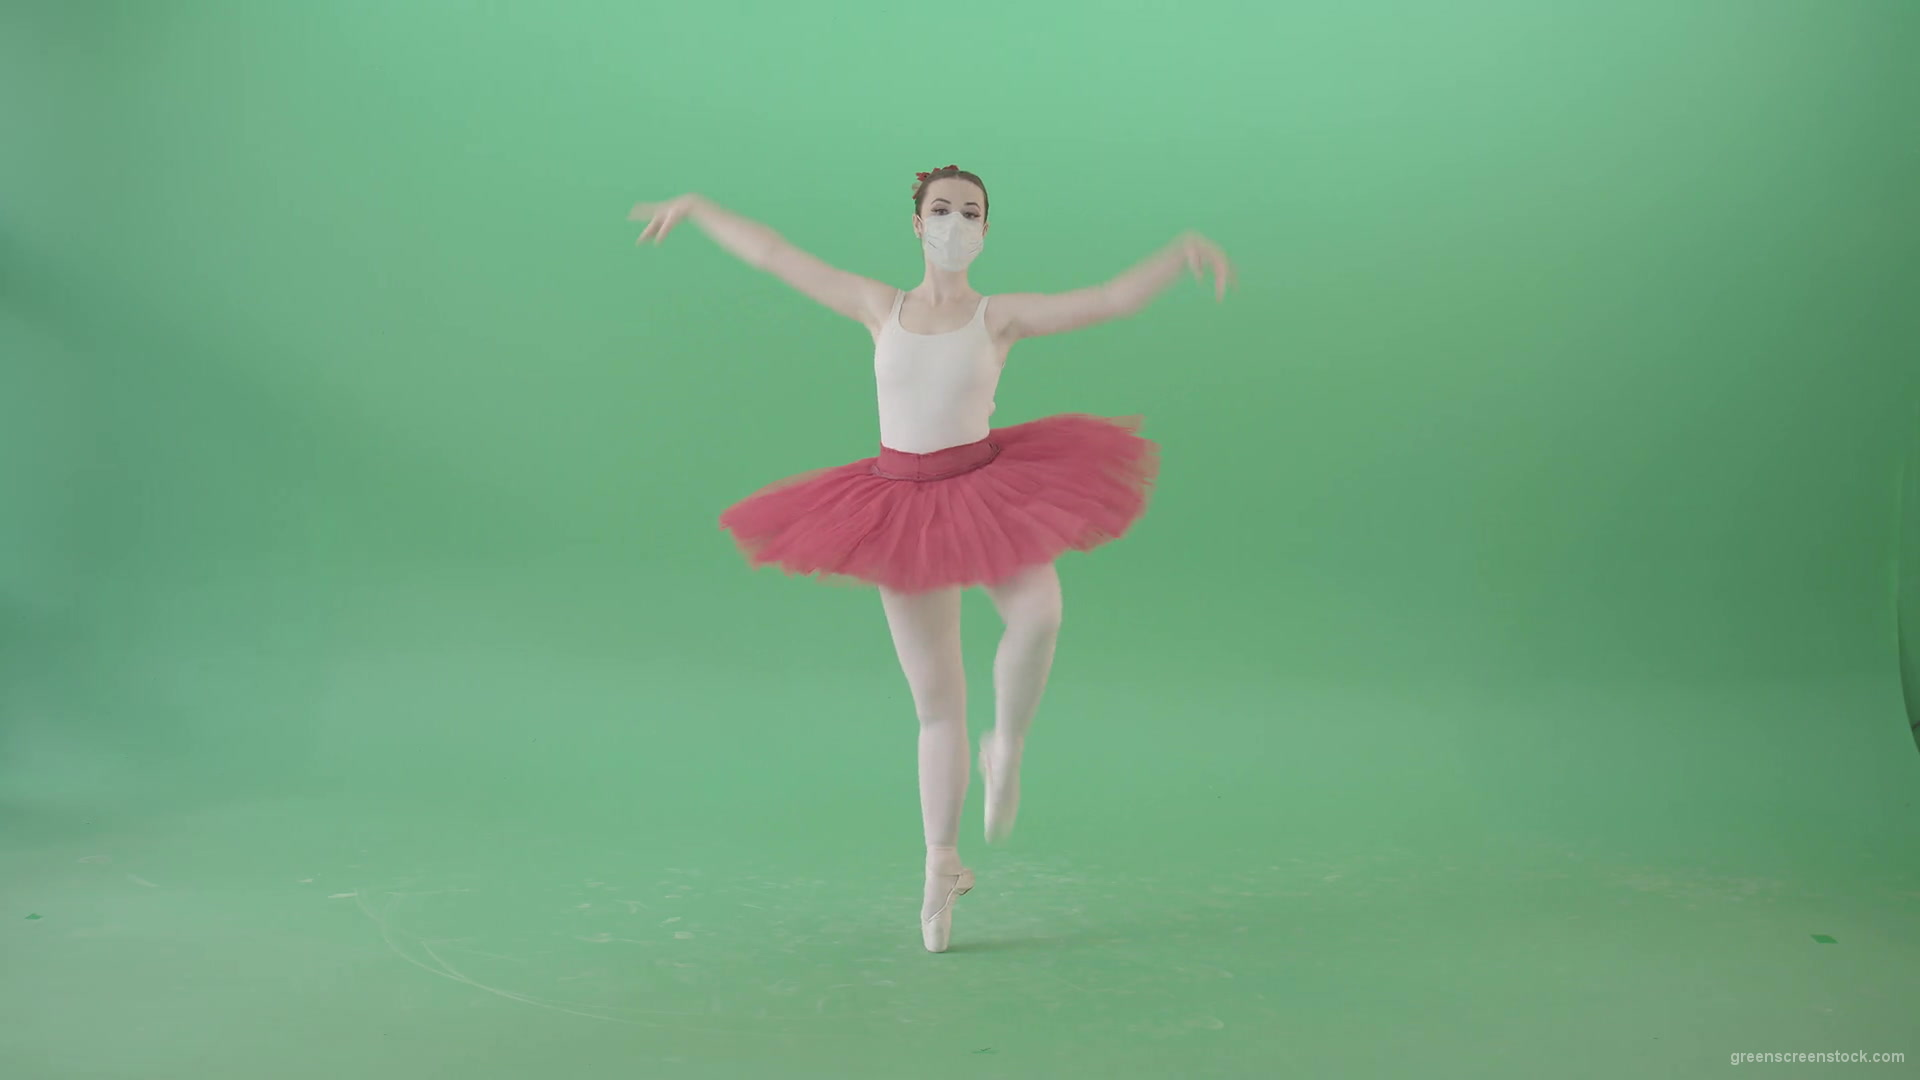 Ballet-Girl-in-Corona-Virus-Mask-Jumping-like-ballerina-isolated-on-green-screen-4K-Video-Footage-1920_008 Green Screen Stock